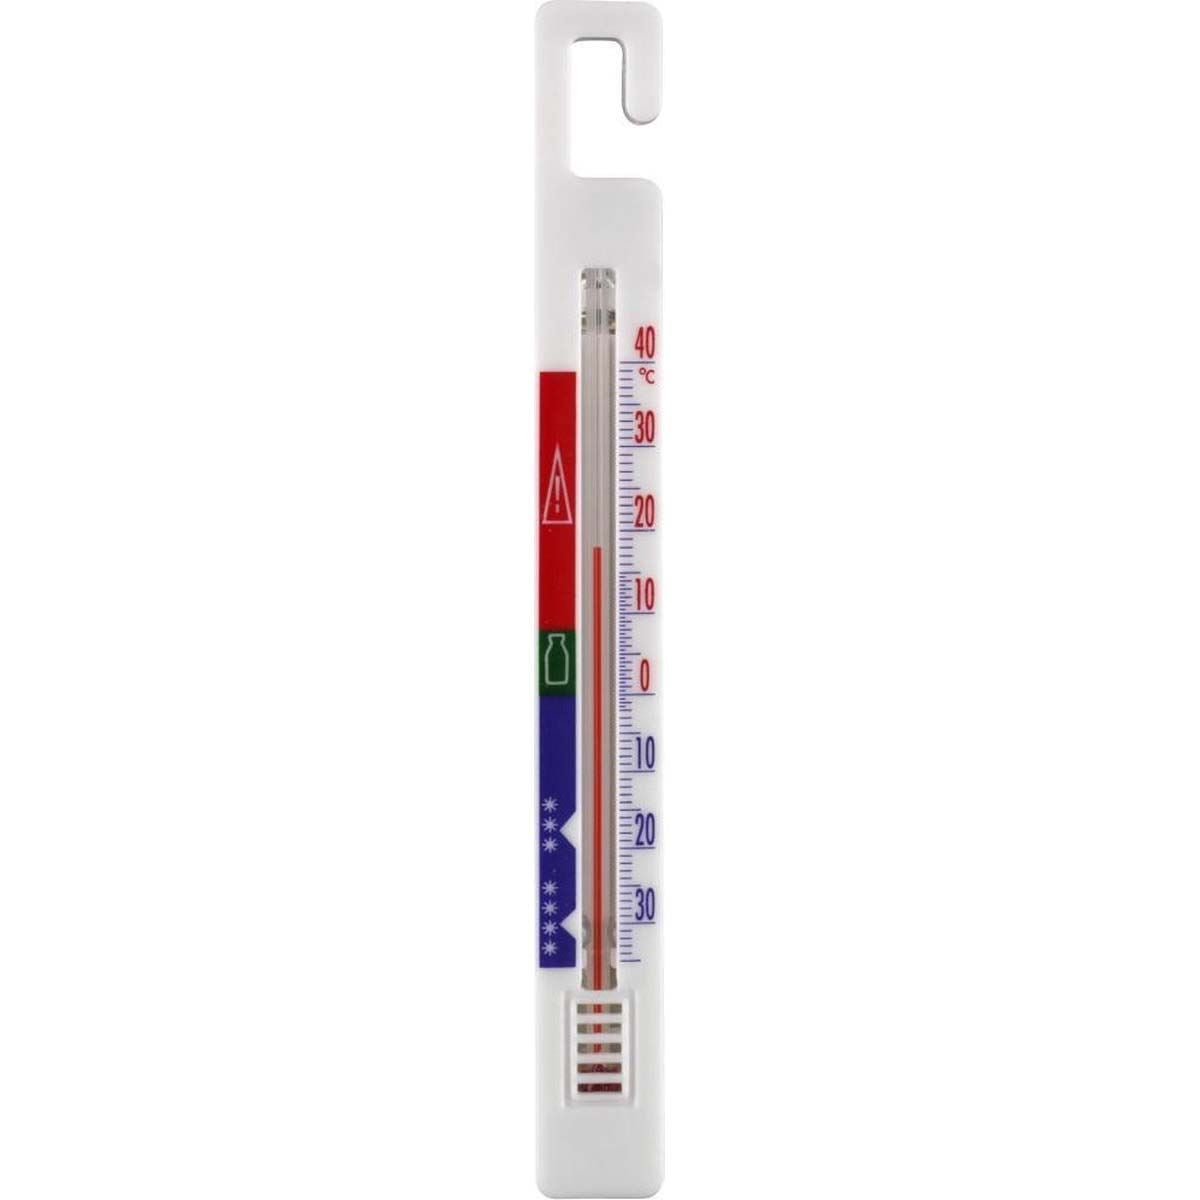 WPRO Fridge freezer thermometer TER214